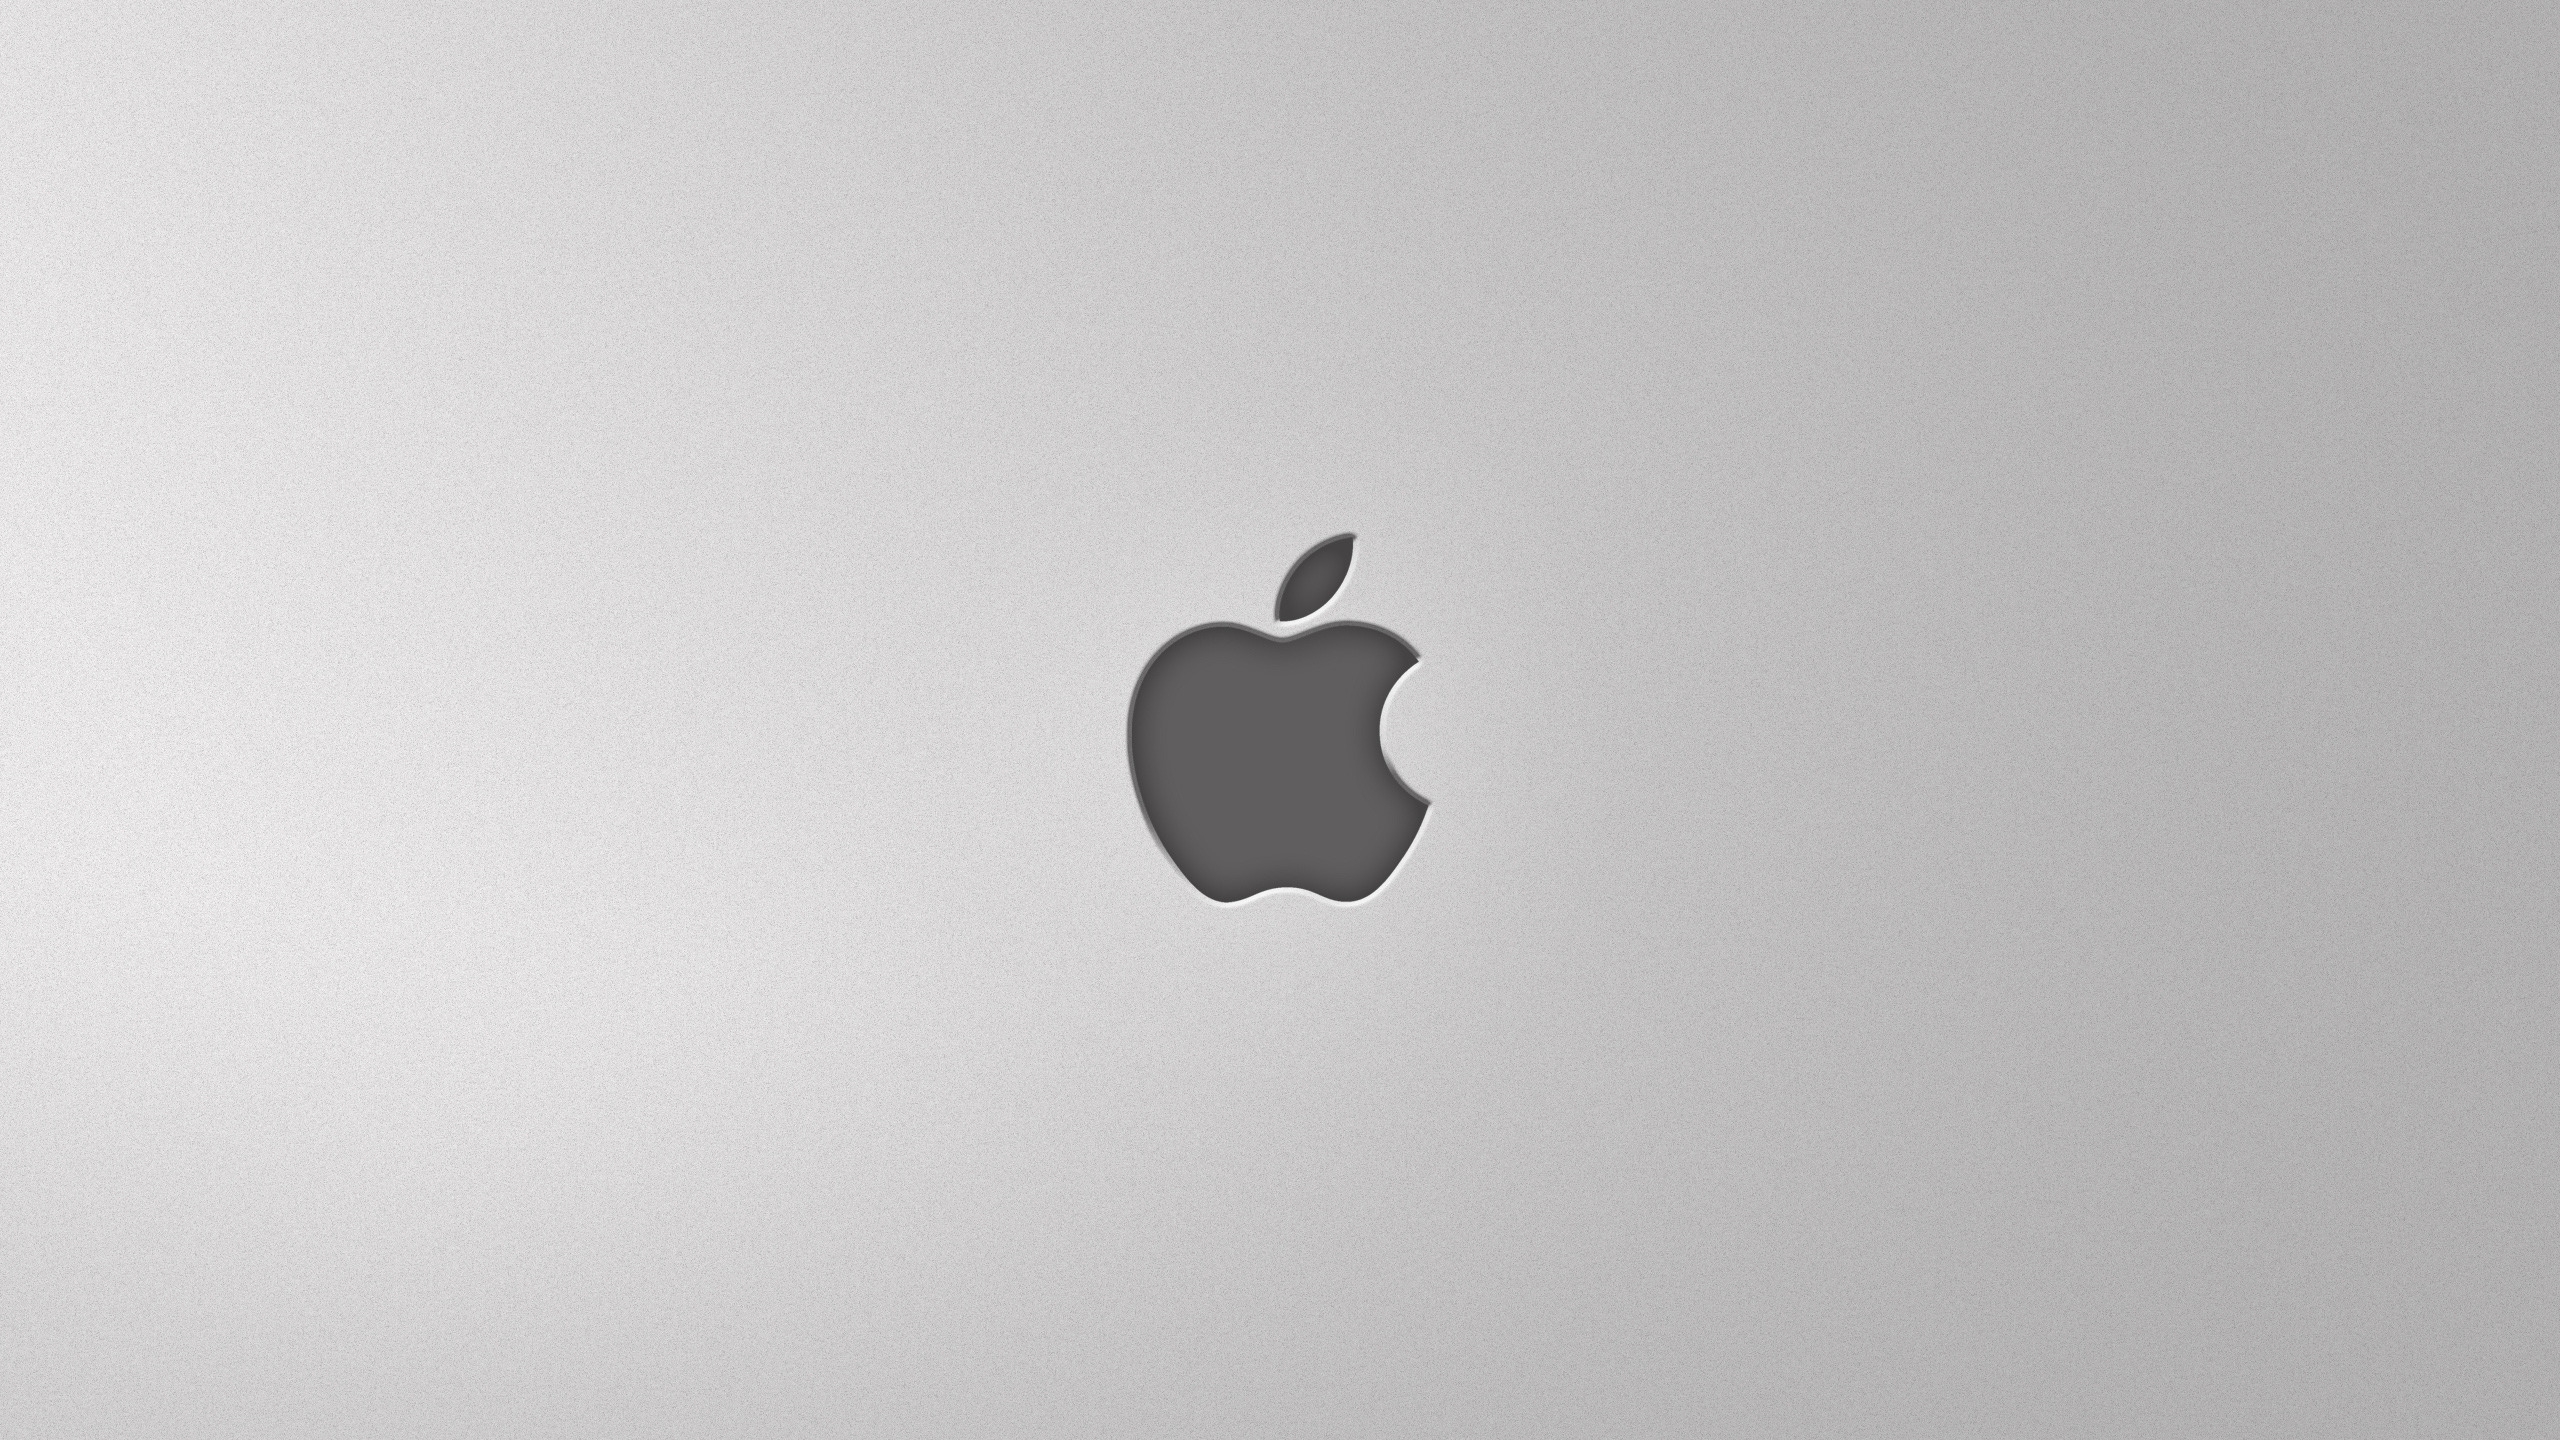 Обои на айфон яблоко. Айфон значок Эппл. Эппл макбук логотип. Яблоко айфон. Обои Apple.